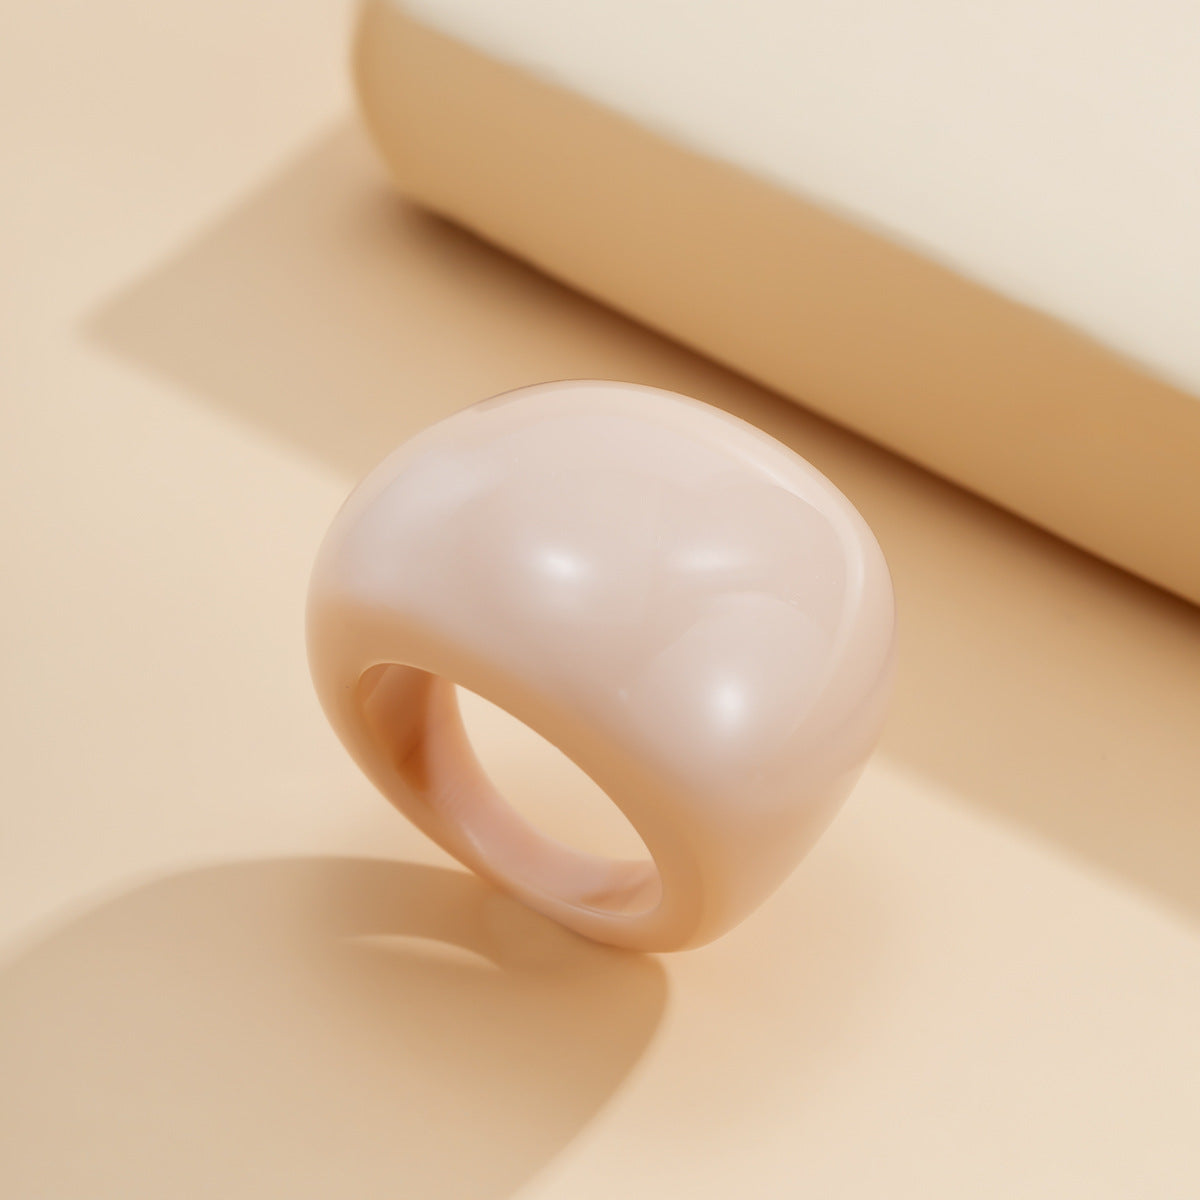 Retro Geometric Ring with Macaron-colored Design